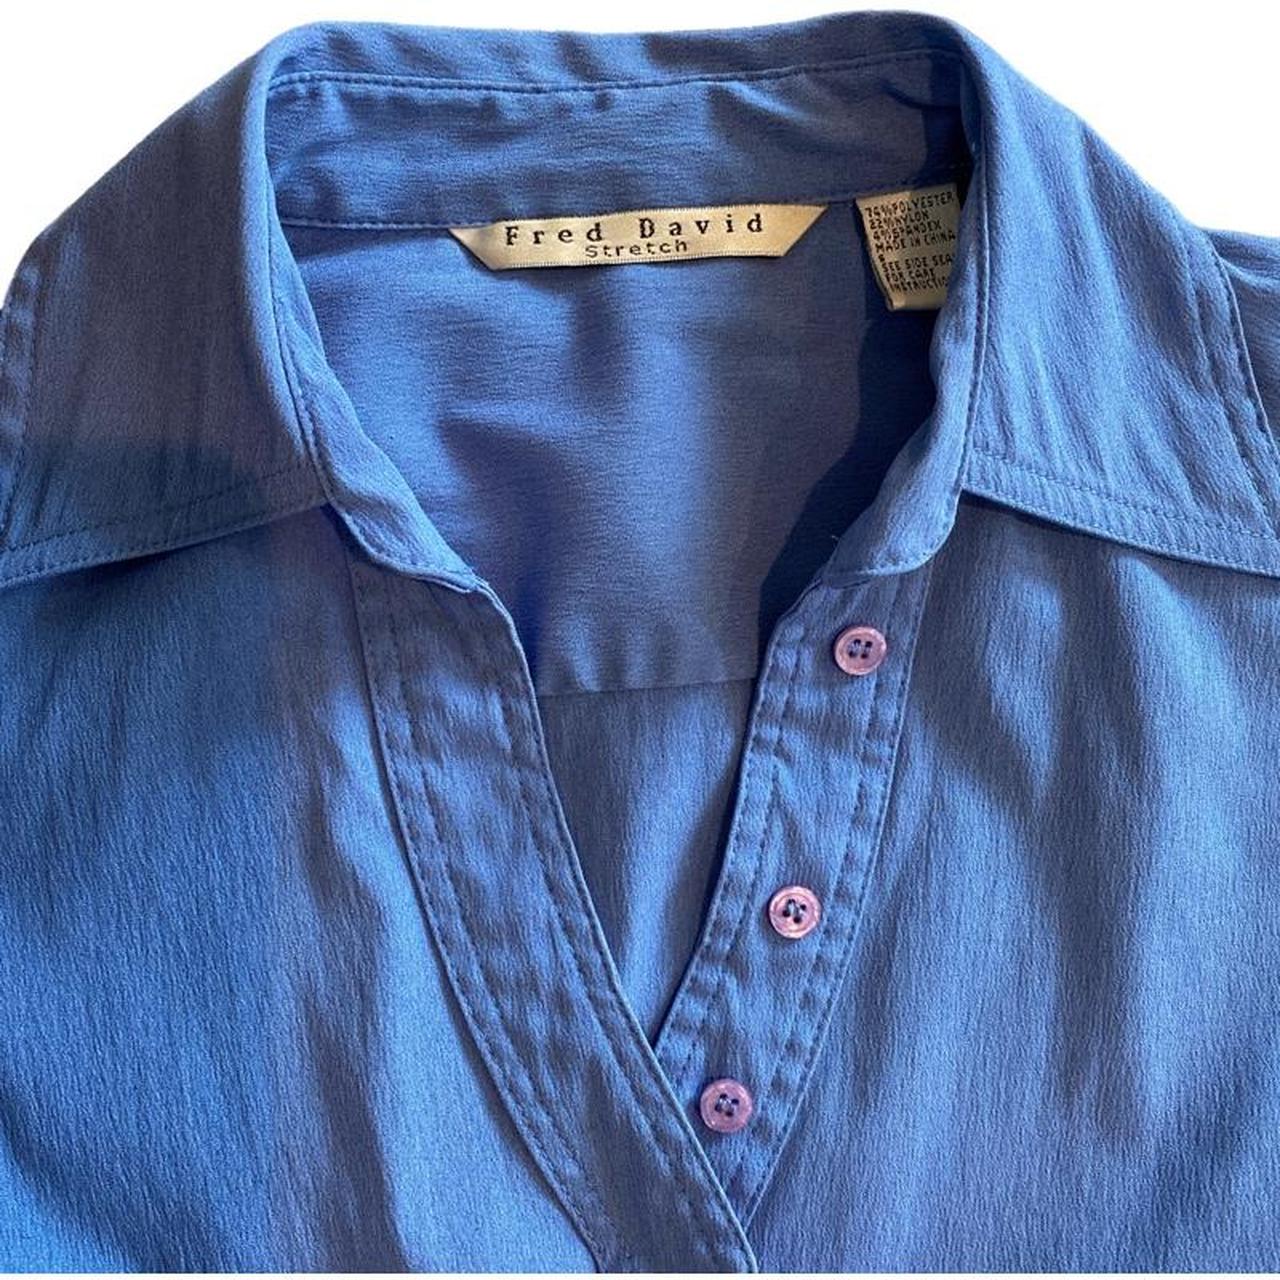 Product Image 2 - Fred David shirt top blouse.